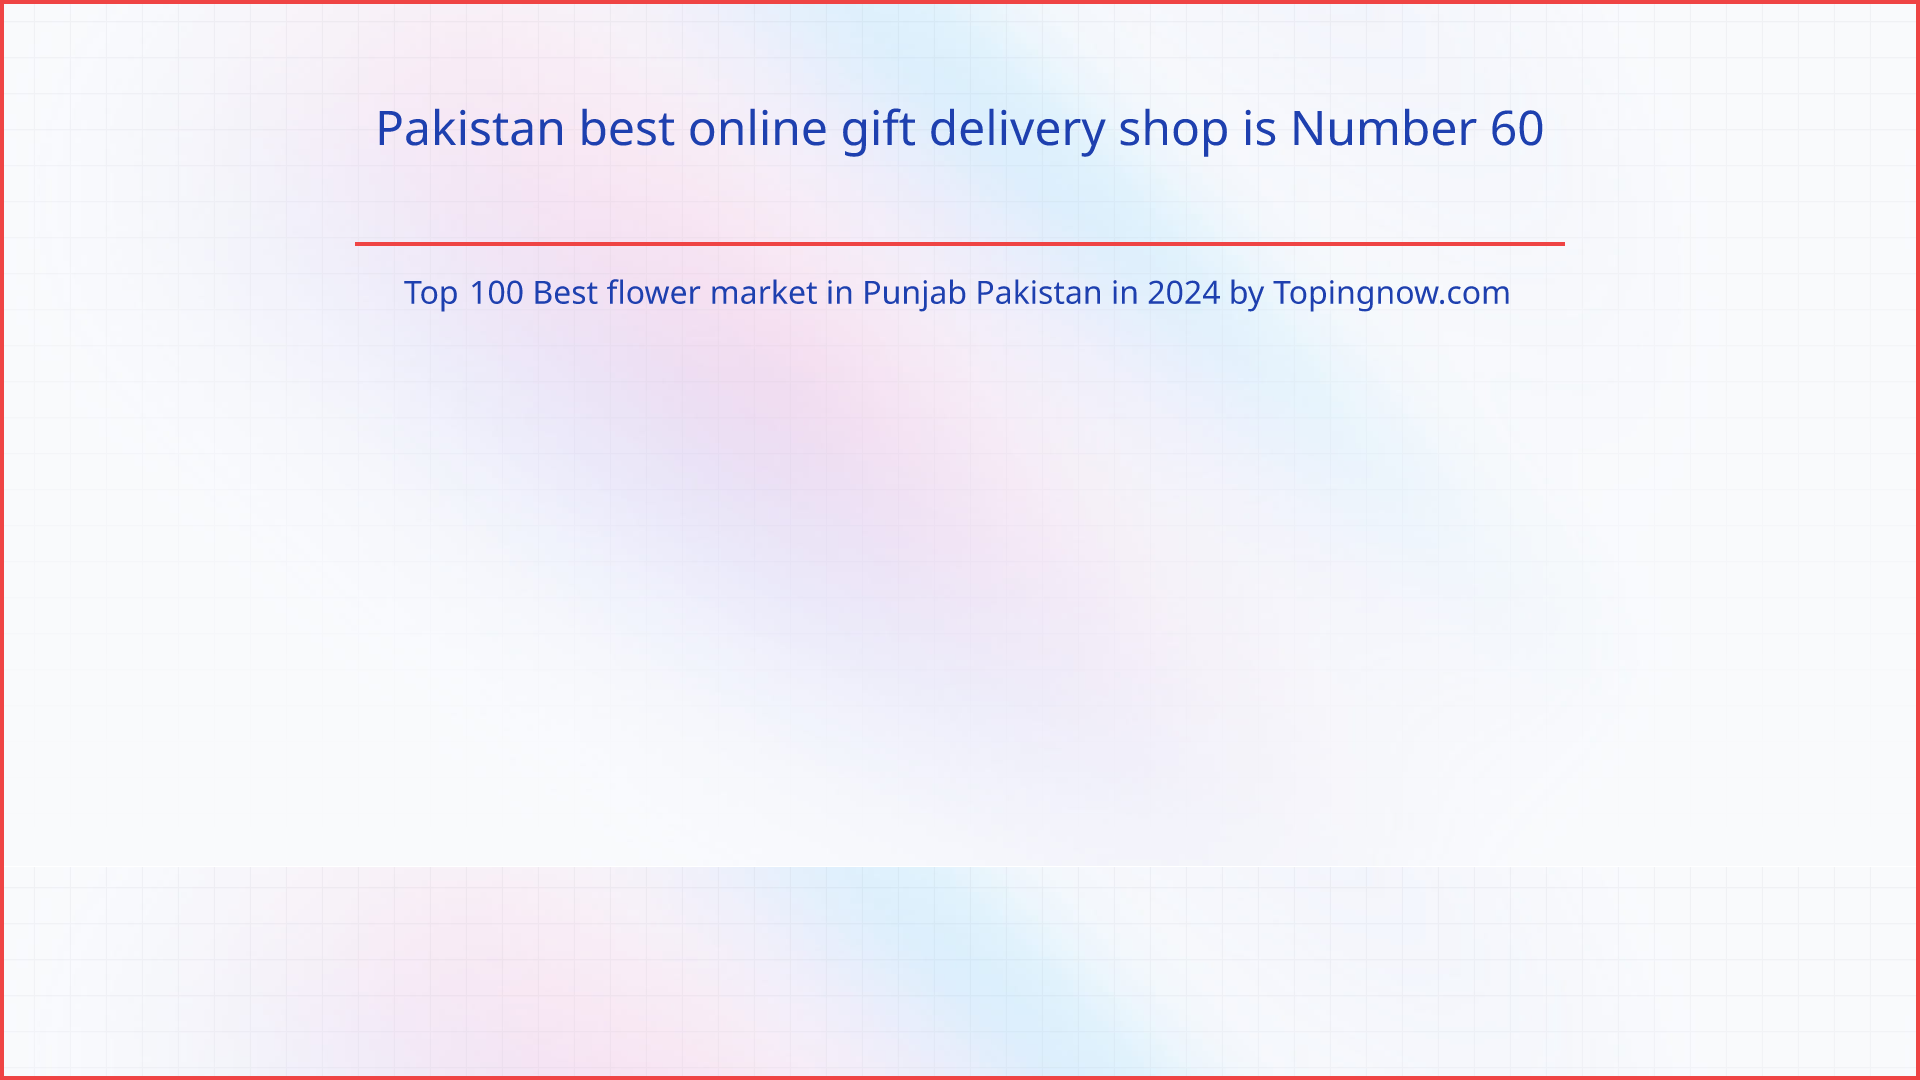 Pakistan best online gift delivery shop: Top 100 Best flower market in Punjab Pakistan in 2024